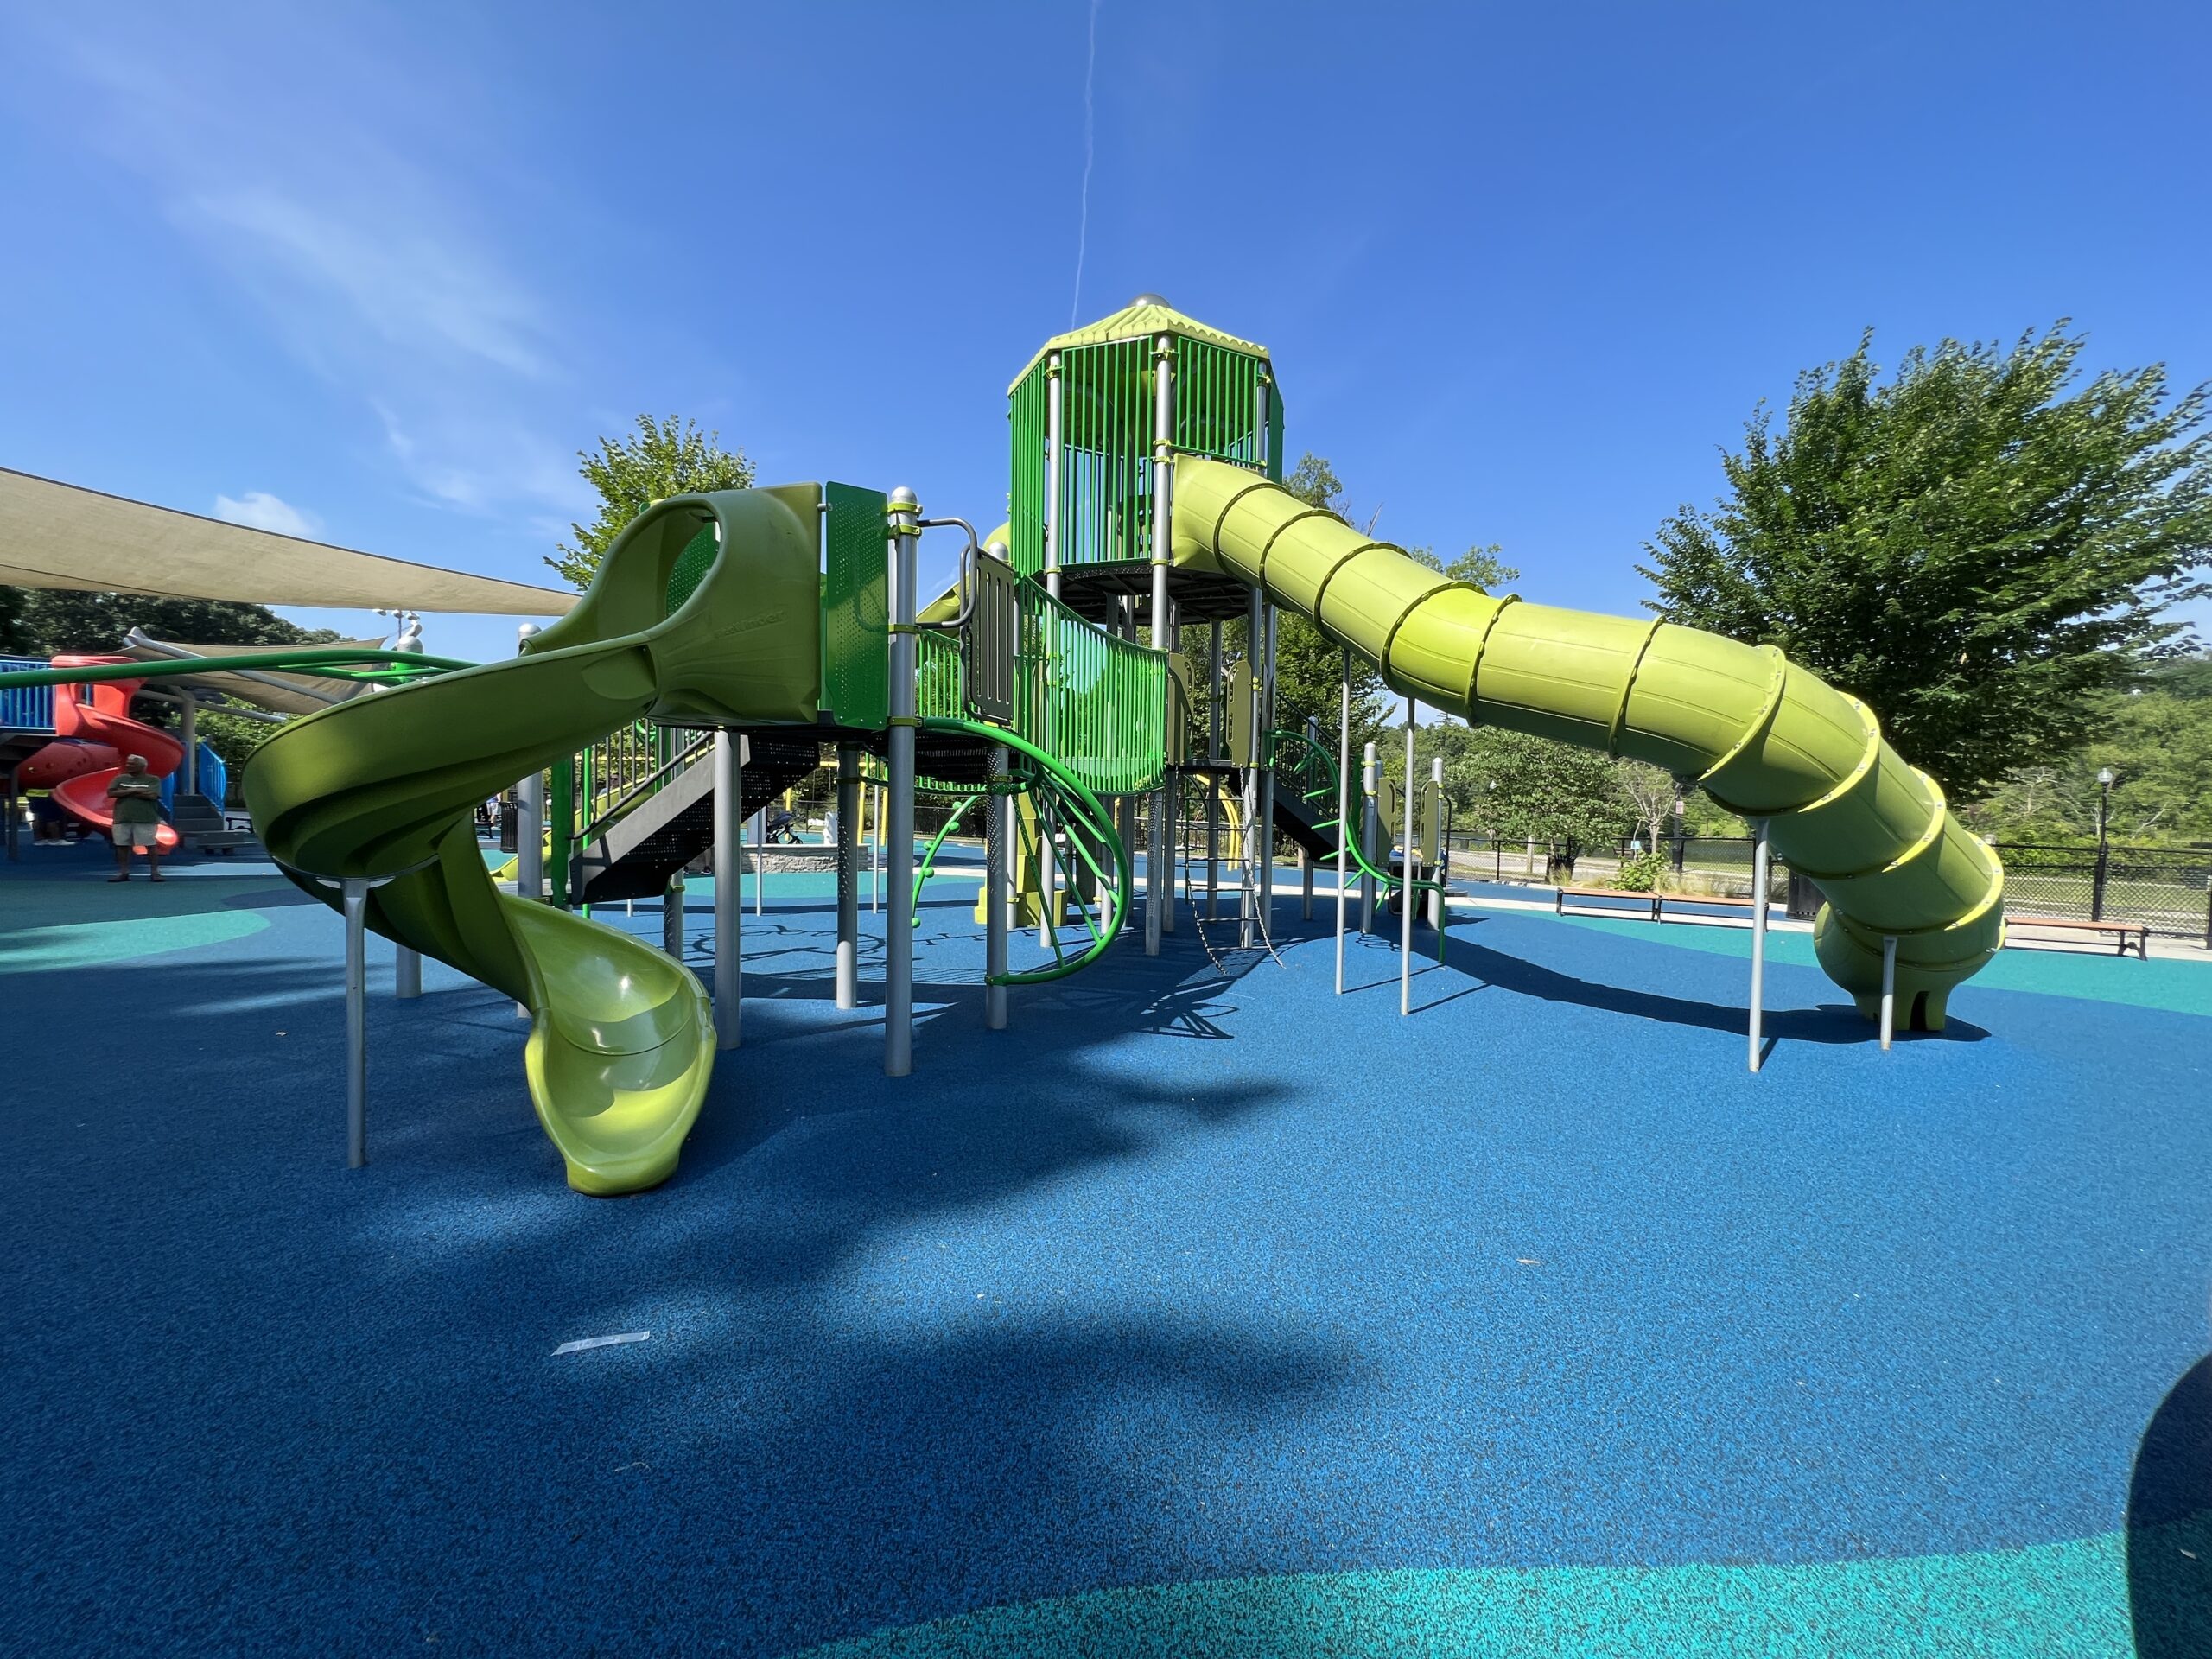 Verona Park Playground in Verona NJ - WIDE image - playground slide side